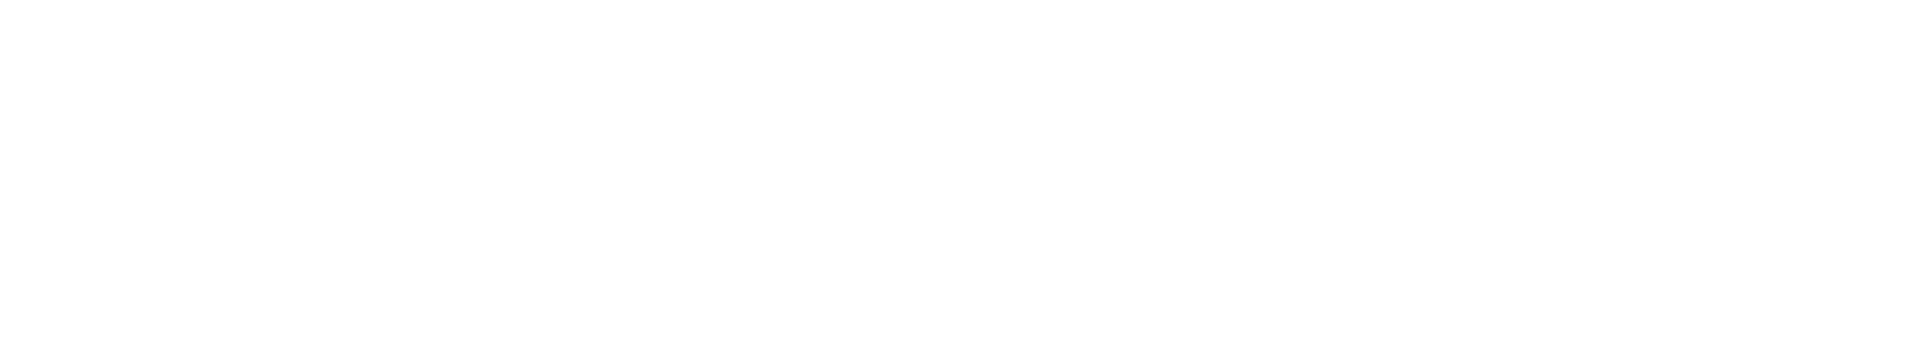 World Ministry Fellowship White Logo